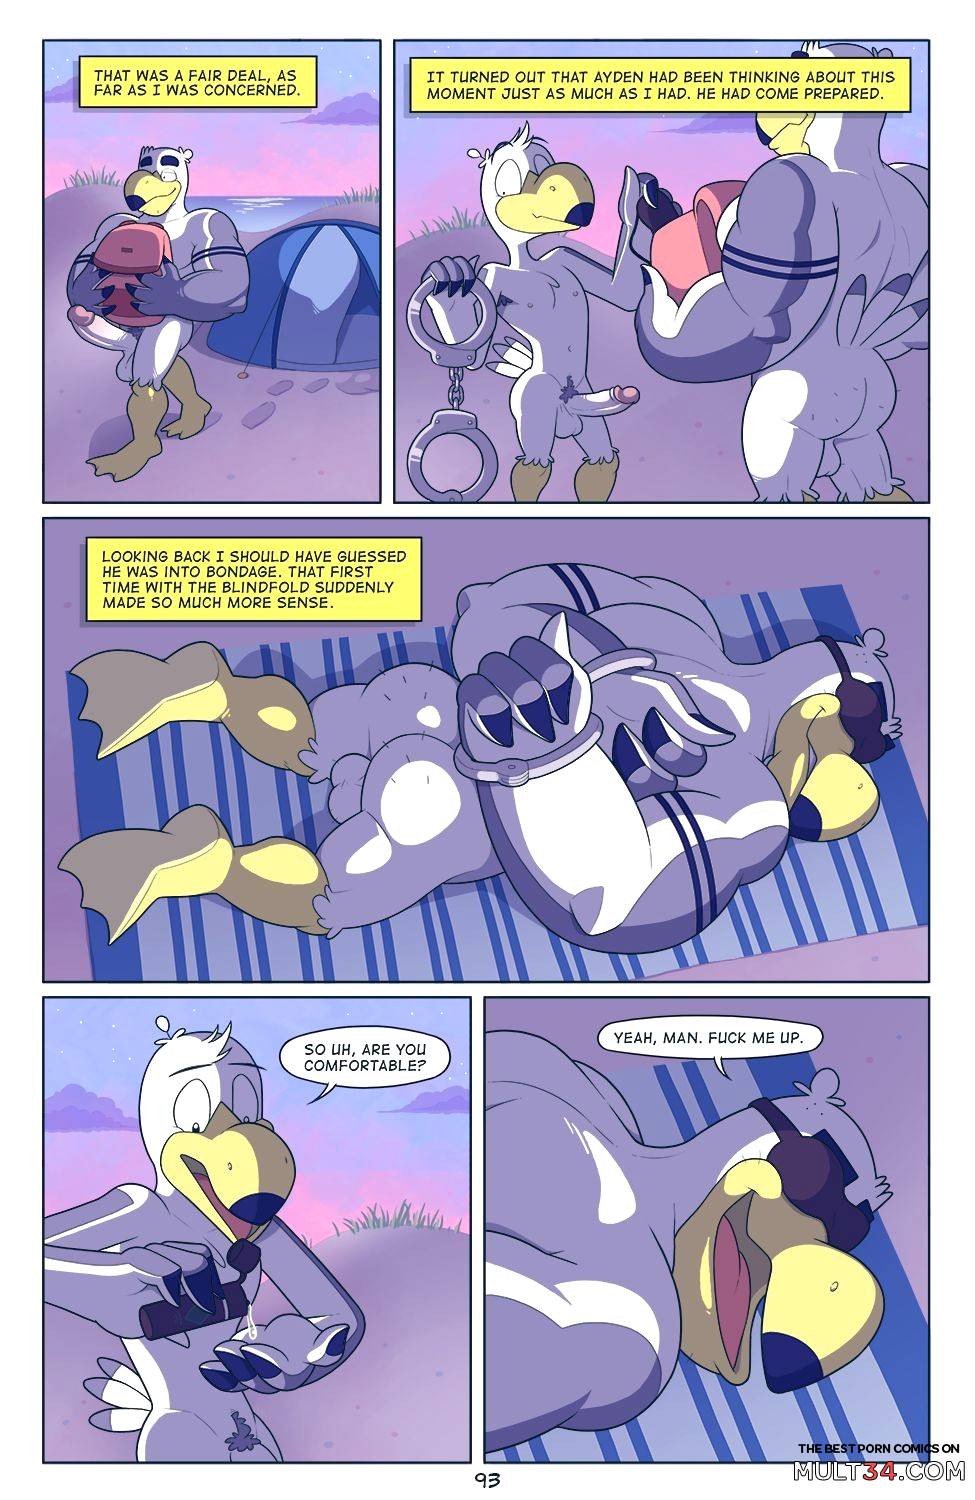 Brogulls page 94